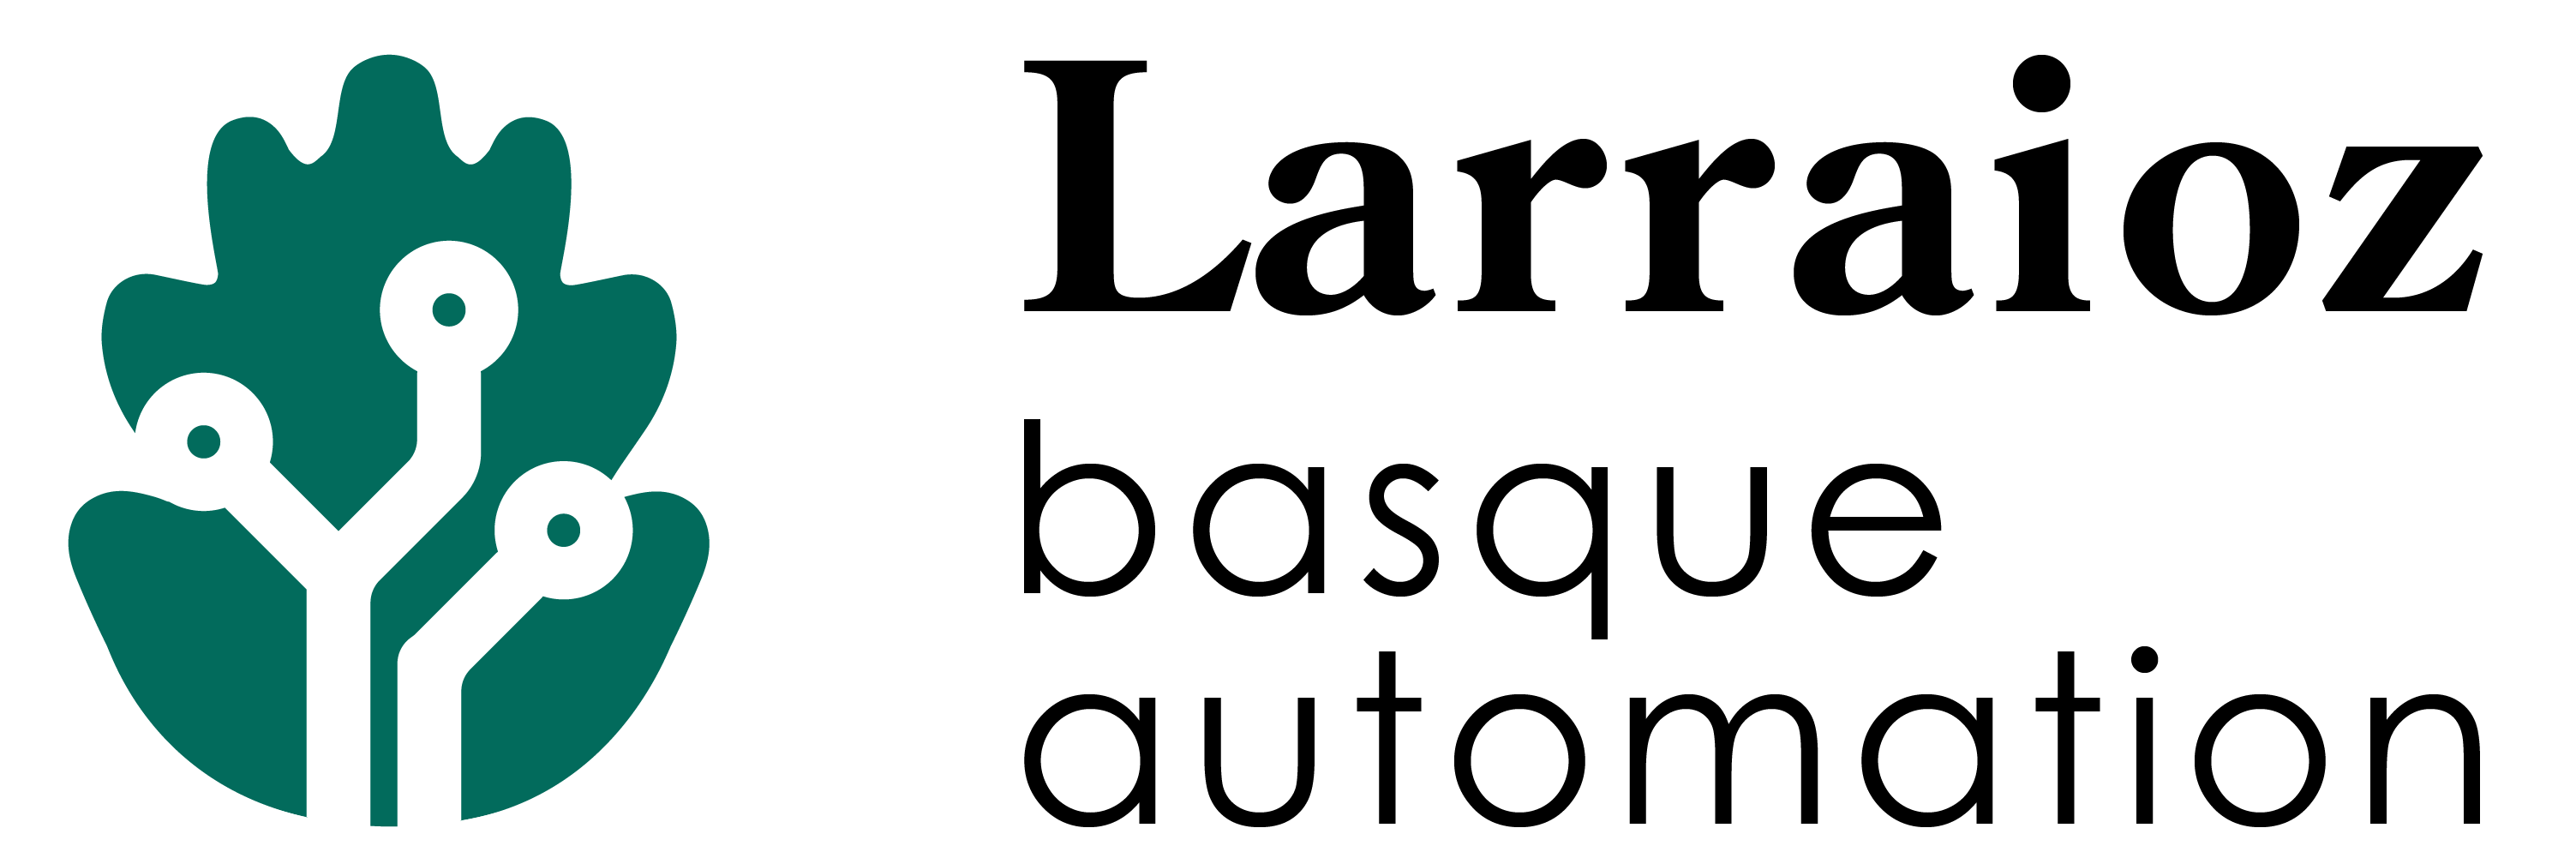 Larraioz Basque Automation